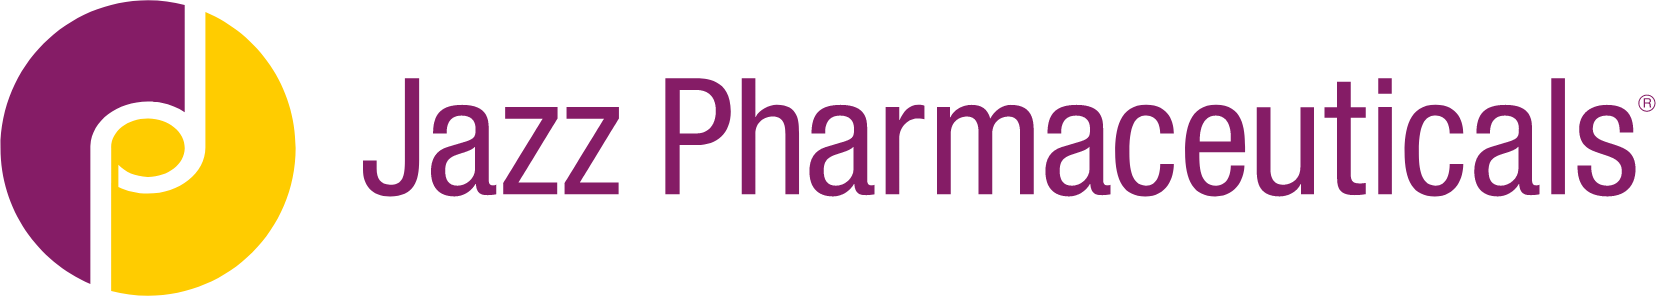 Jazz Pharmaceuticals logo large (transparent PNG)